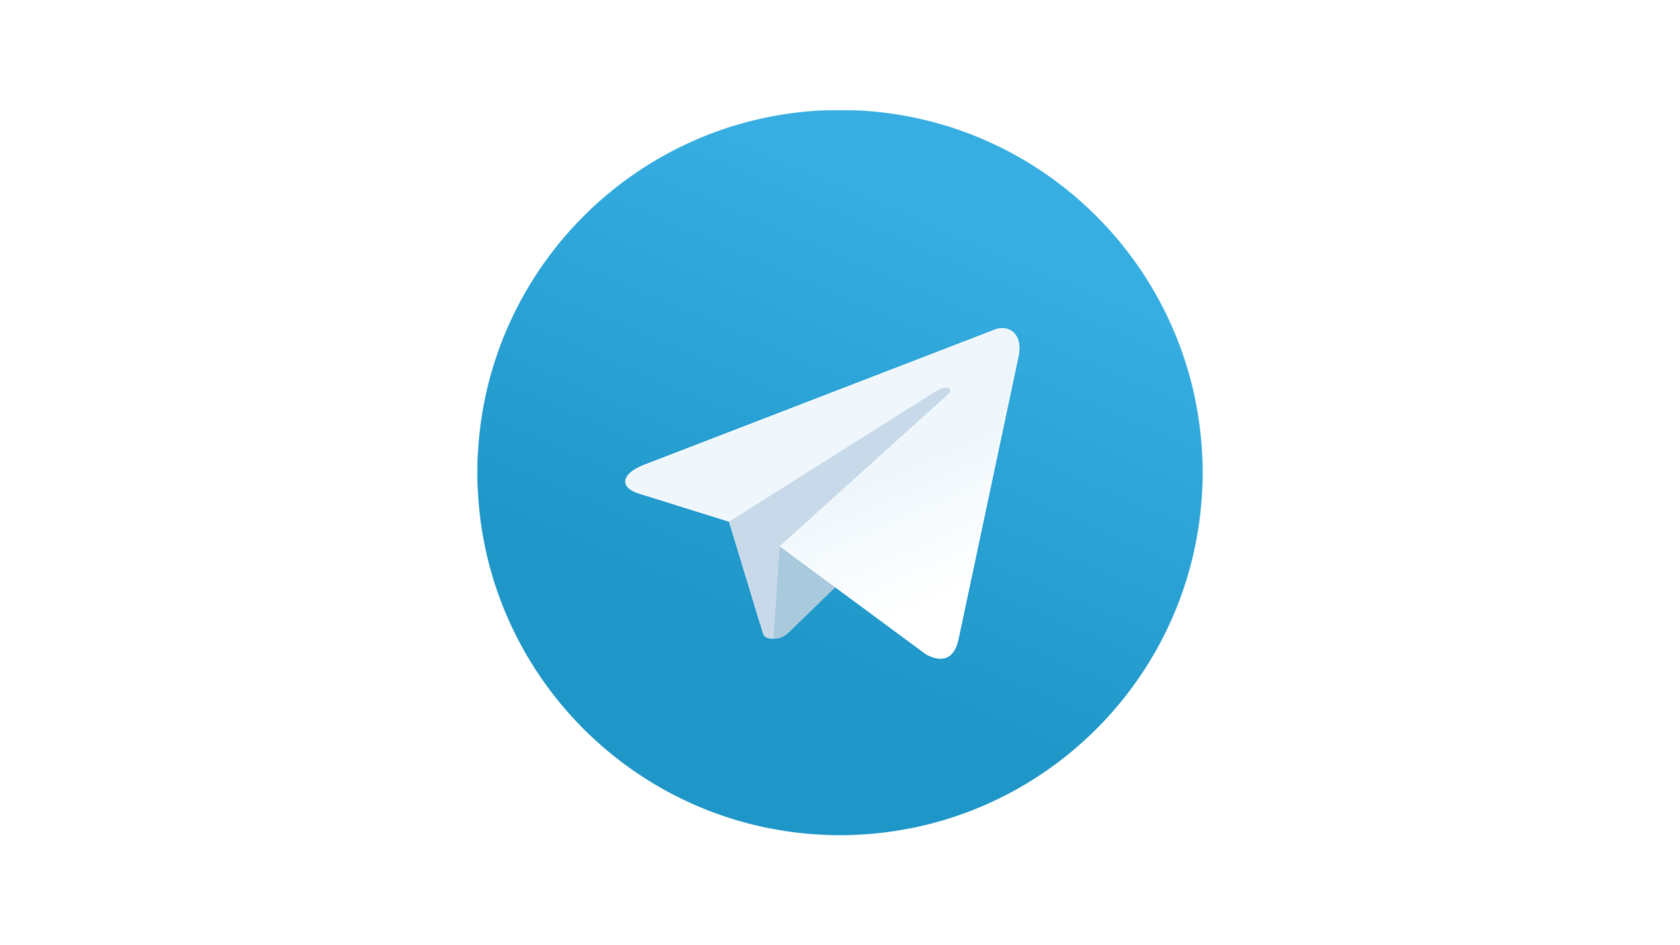 Телеграмм. Иконка телеграмм. Пиктограмма телеграмм. Логотип телеграм на прозрачном фоне.